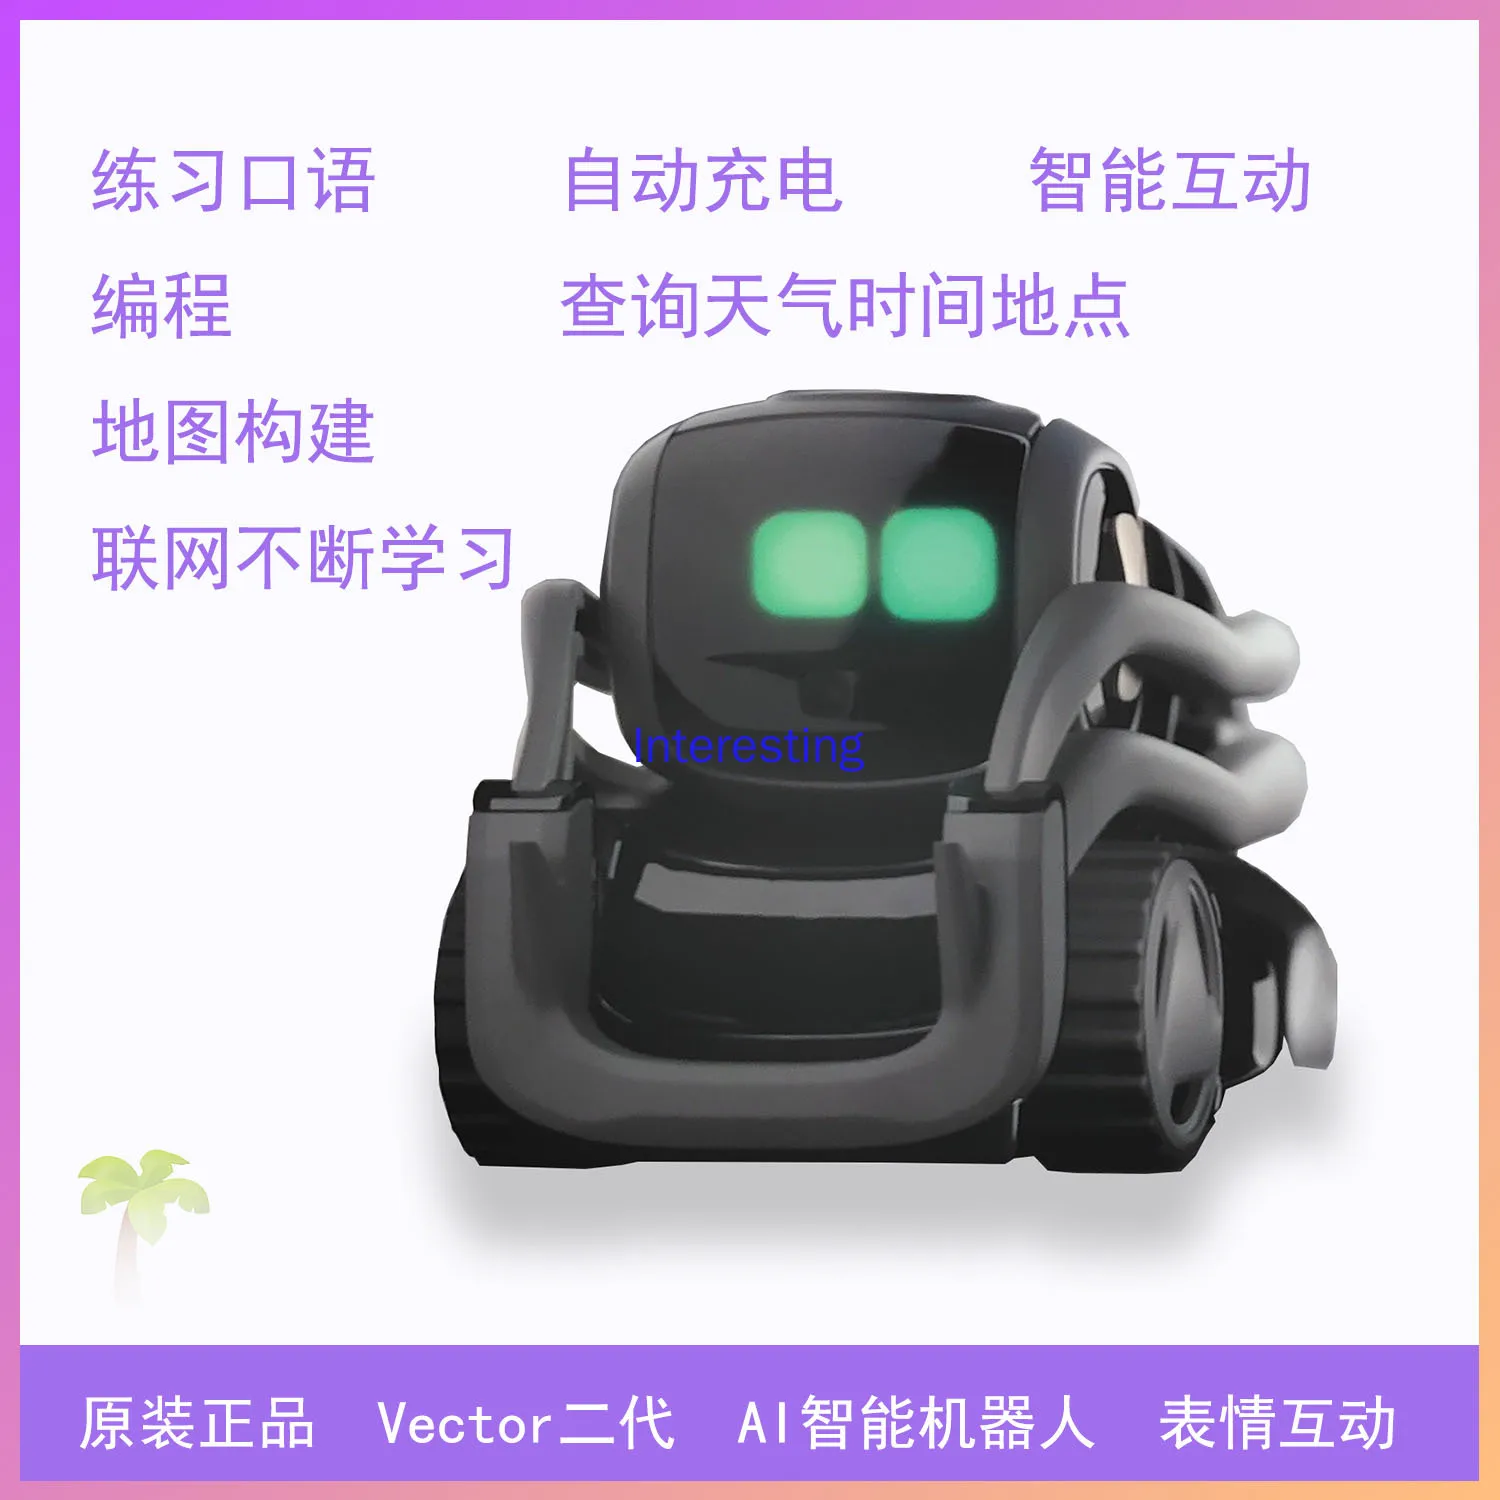 ANKI Vector robot AI smart voice toy chat electronic pet cozmo second generation